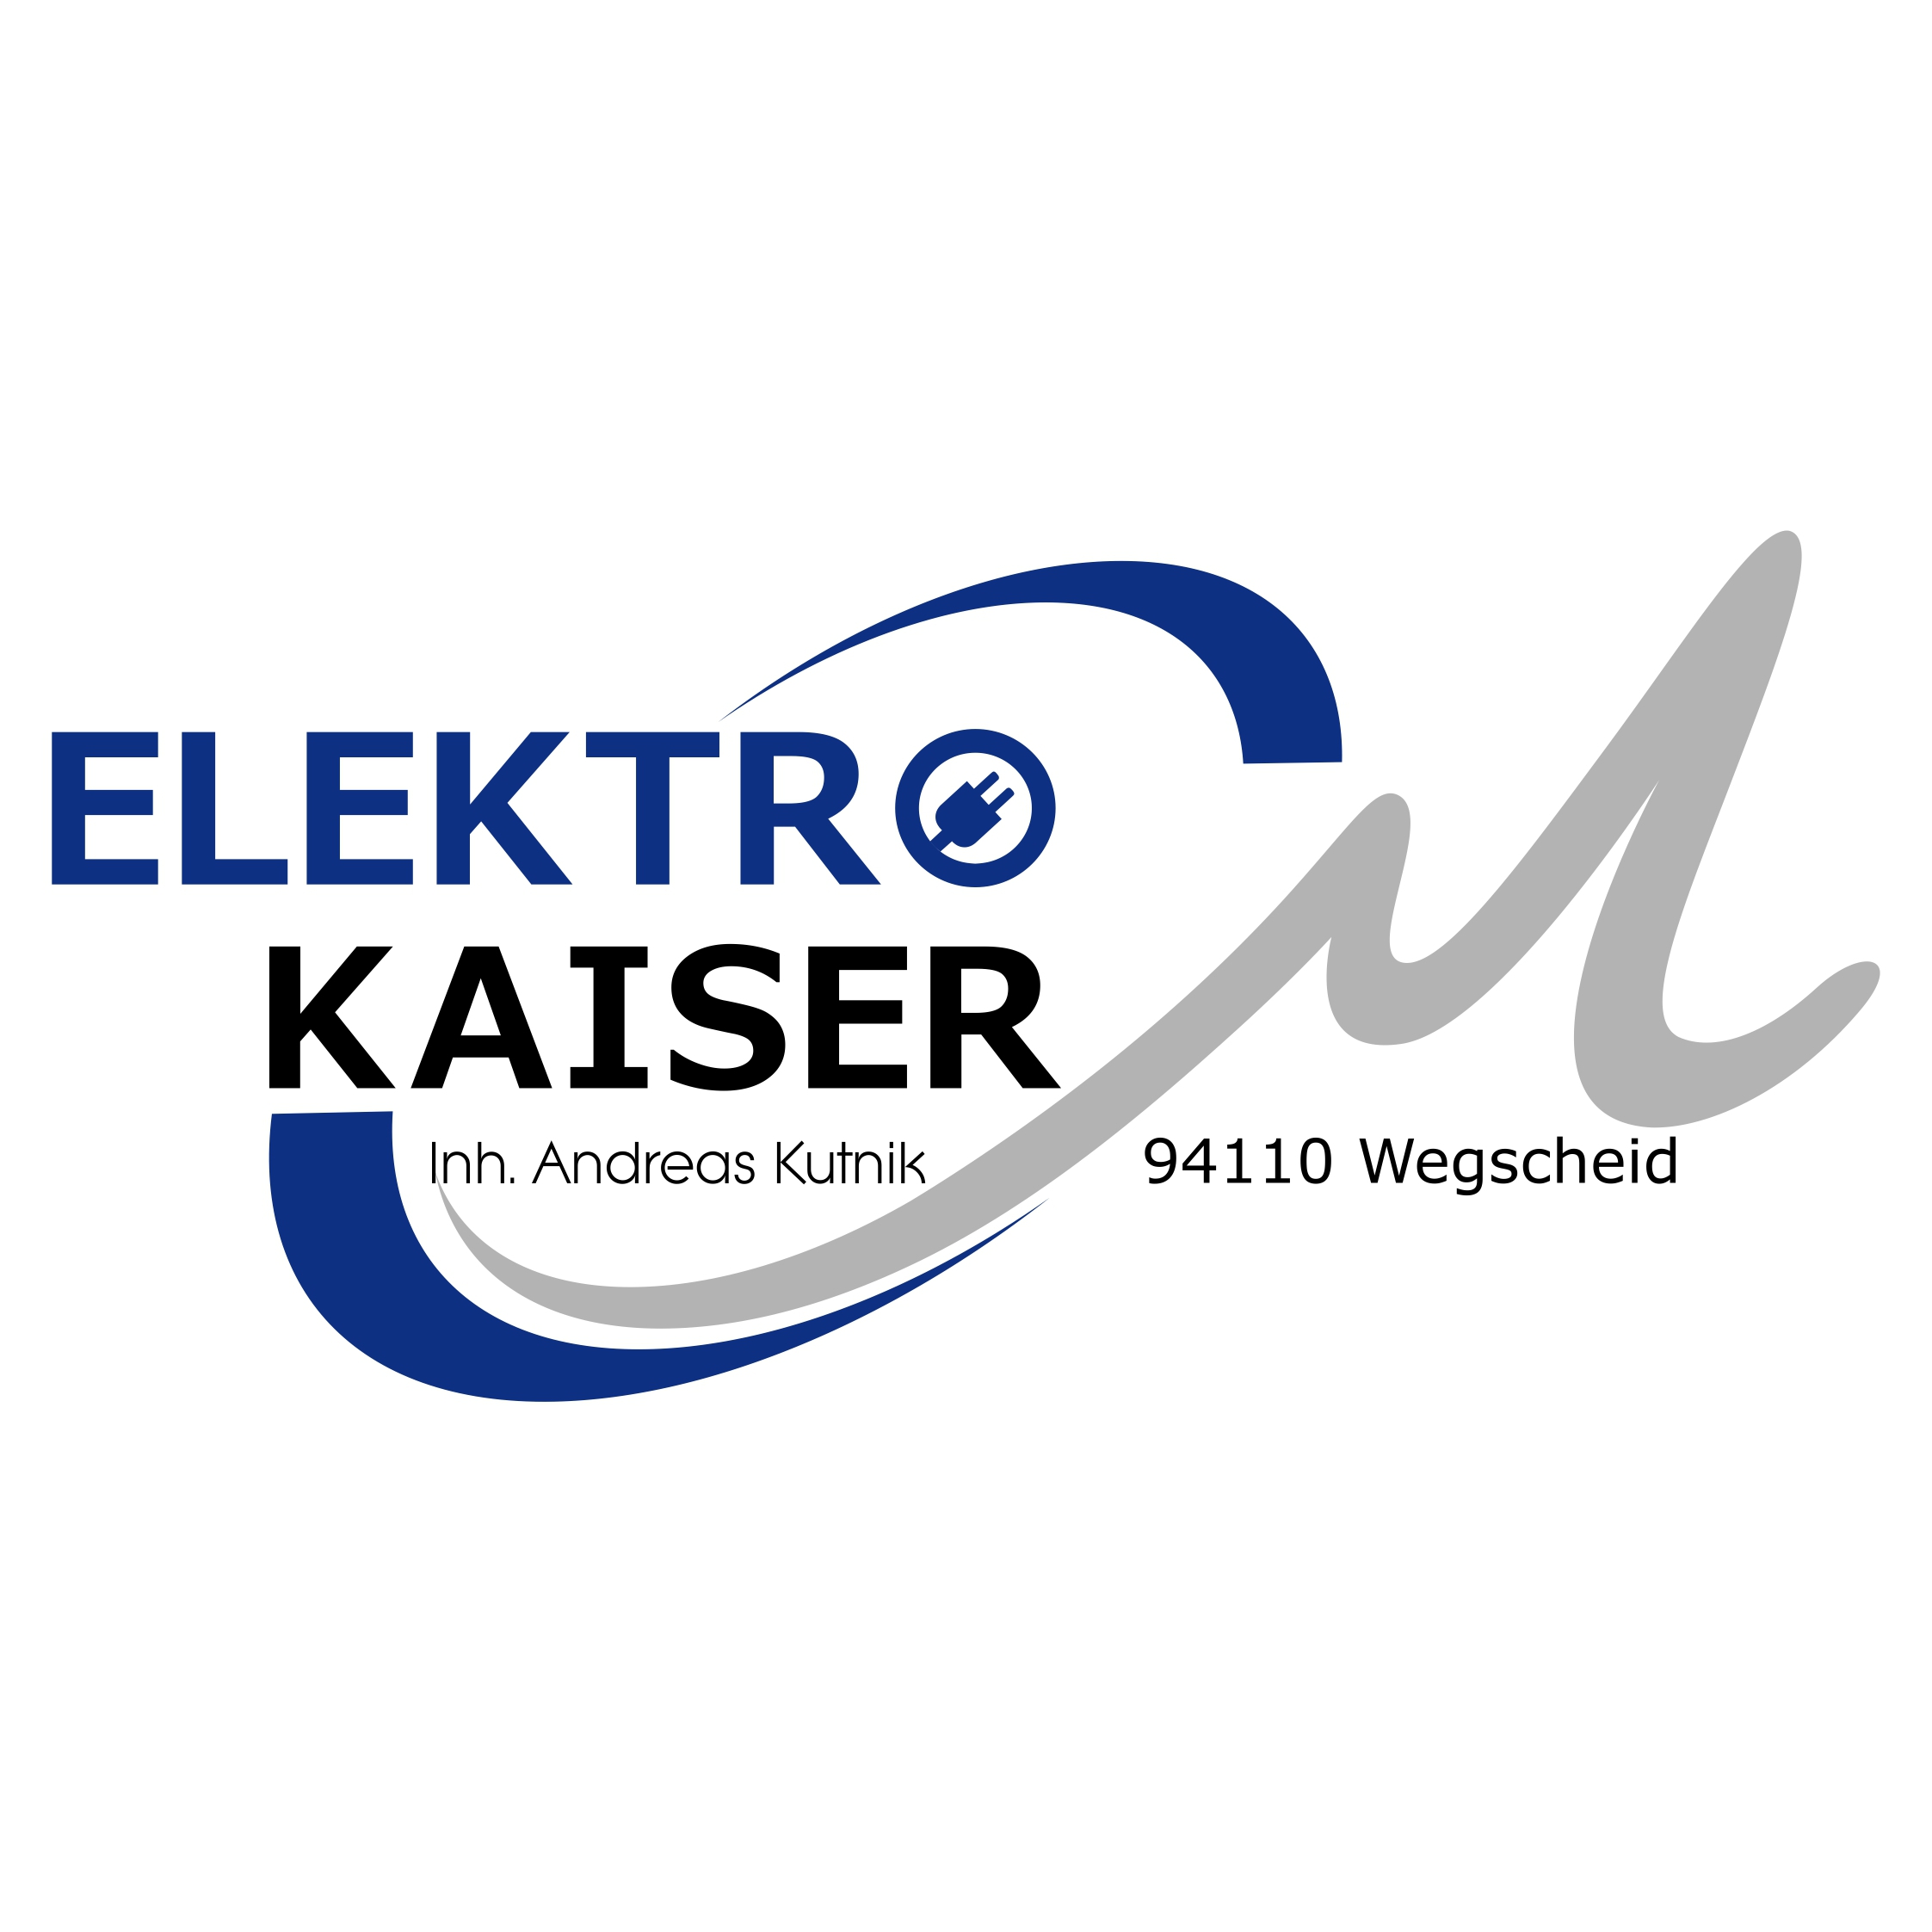 Elektro Kaiser Inh. Andreas Kutnik in Wegscheid in Niederbayern - Logo